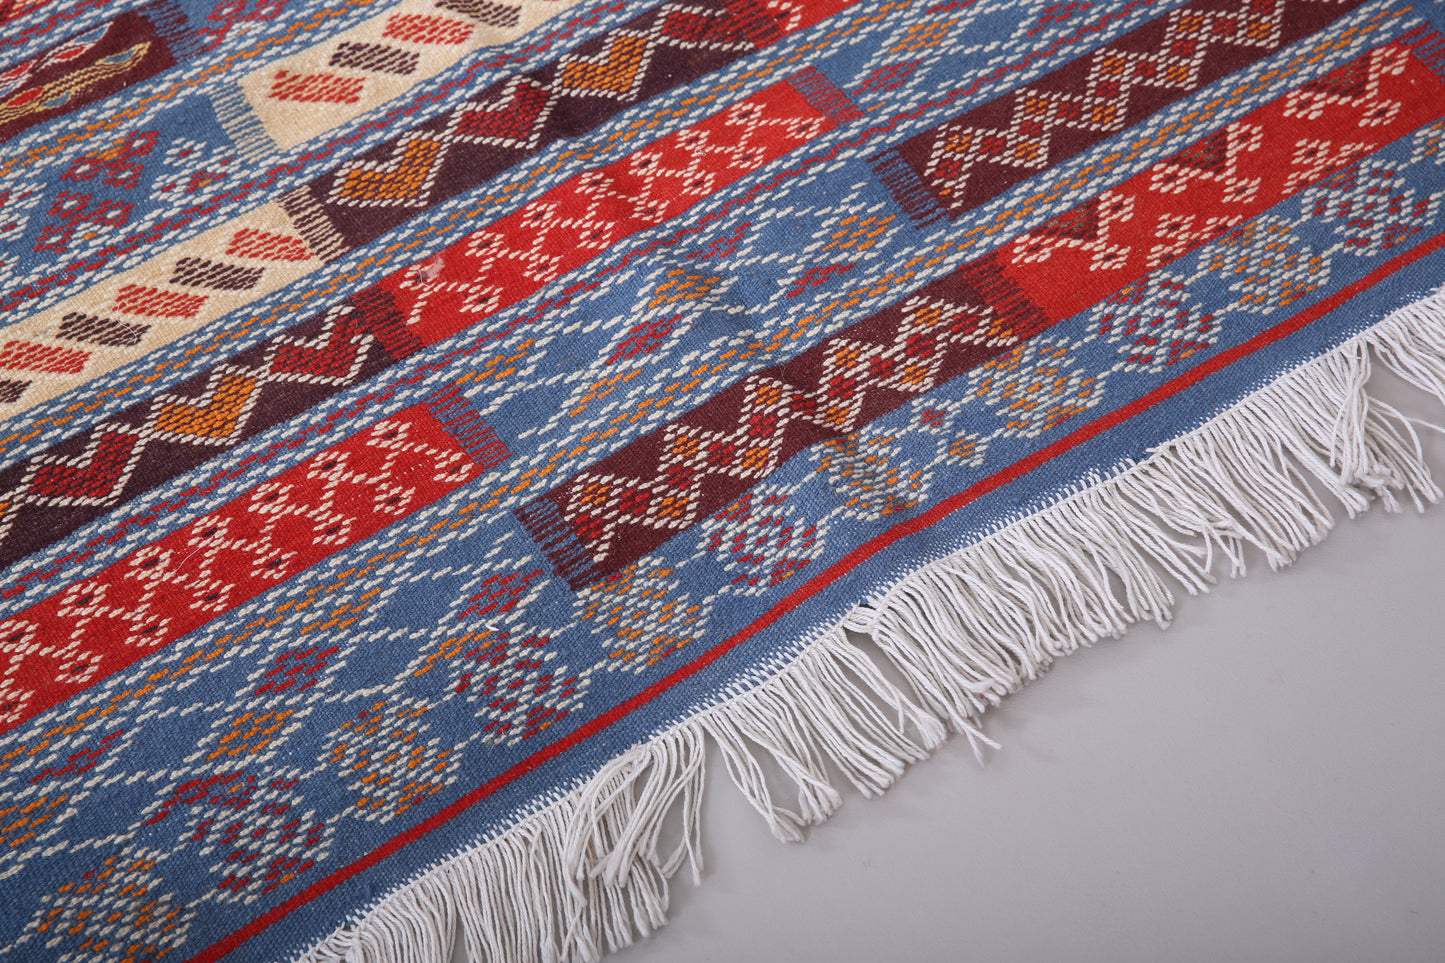 Marokkanischer handgewebter Berberteppich 3,3 FT x 6,5 FT - kleiner Berberteppich - kleiner marokkanischer Teppich - handgefertigter Berberteppich - Vintage marokkanischer Boho-Teppich